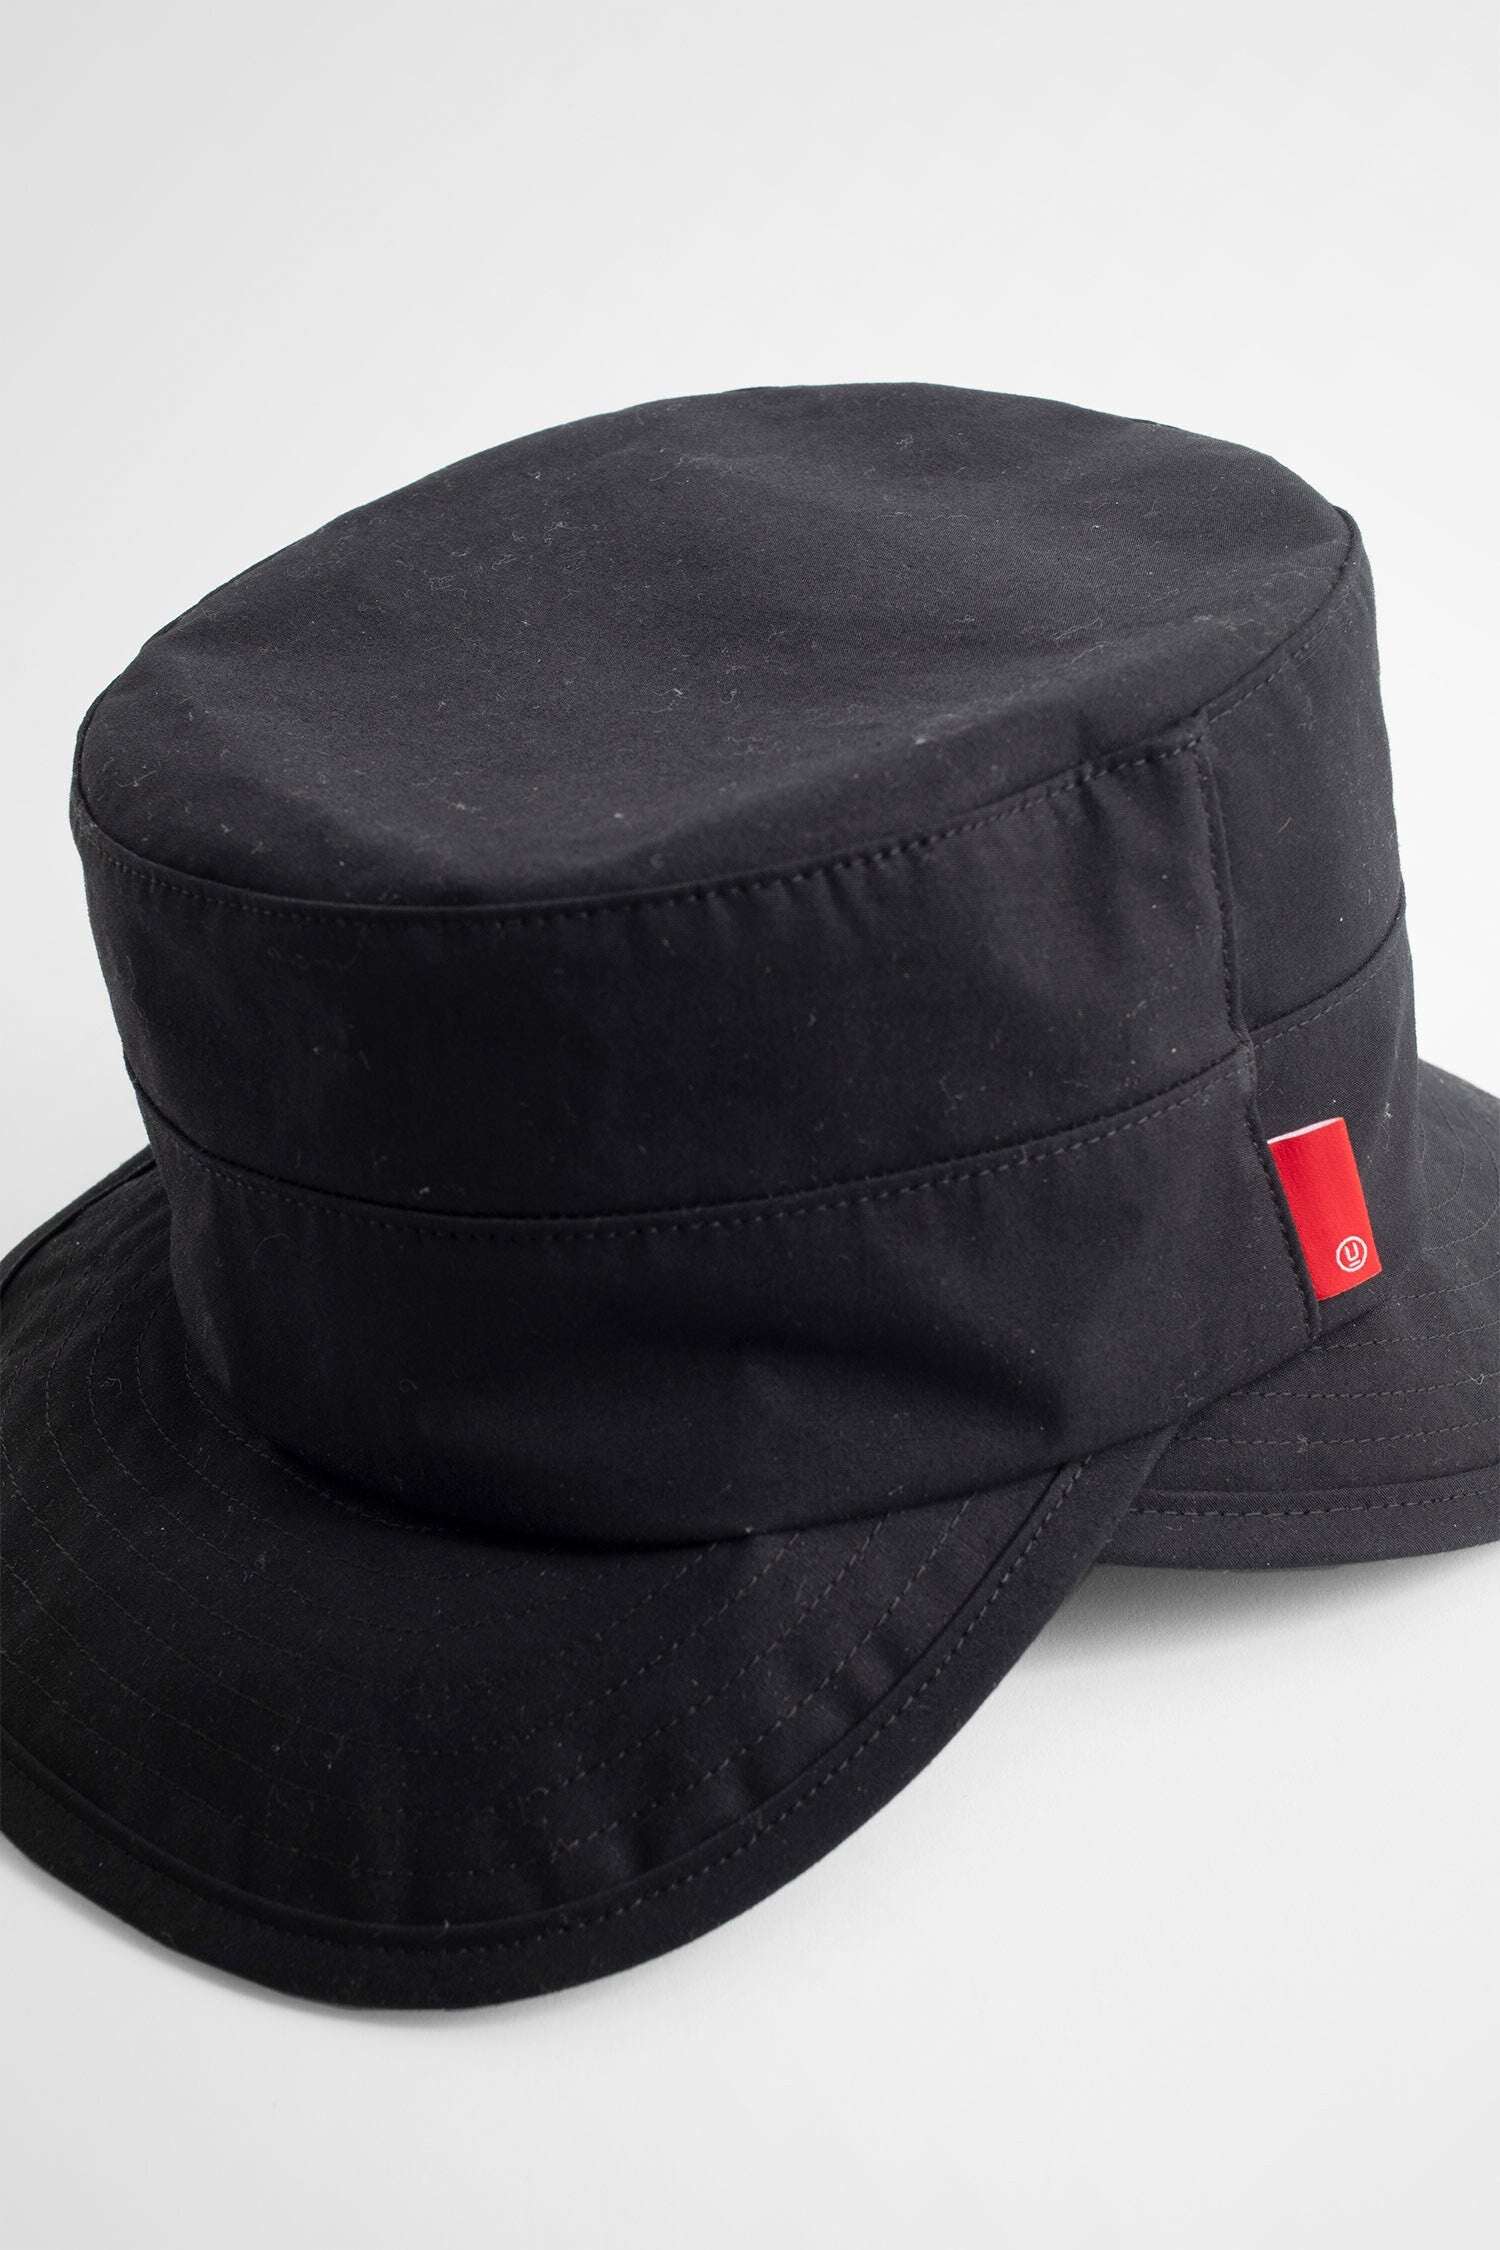 UNDERCOVER MAN BLACK HATS - 5